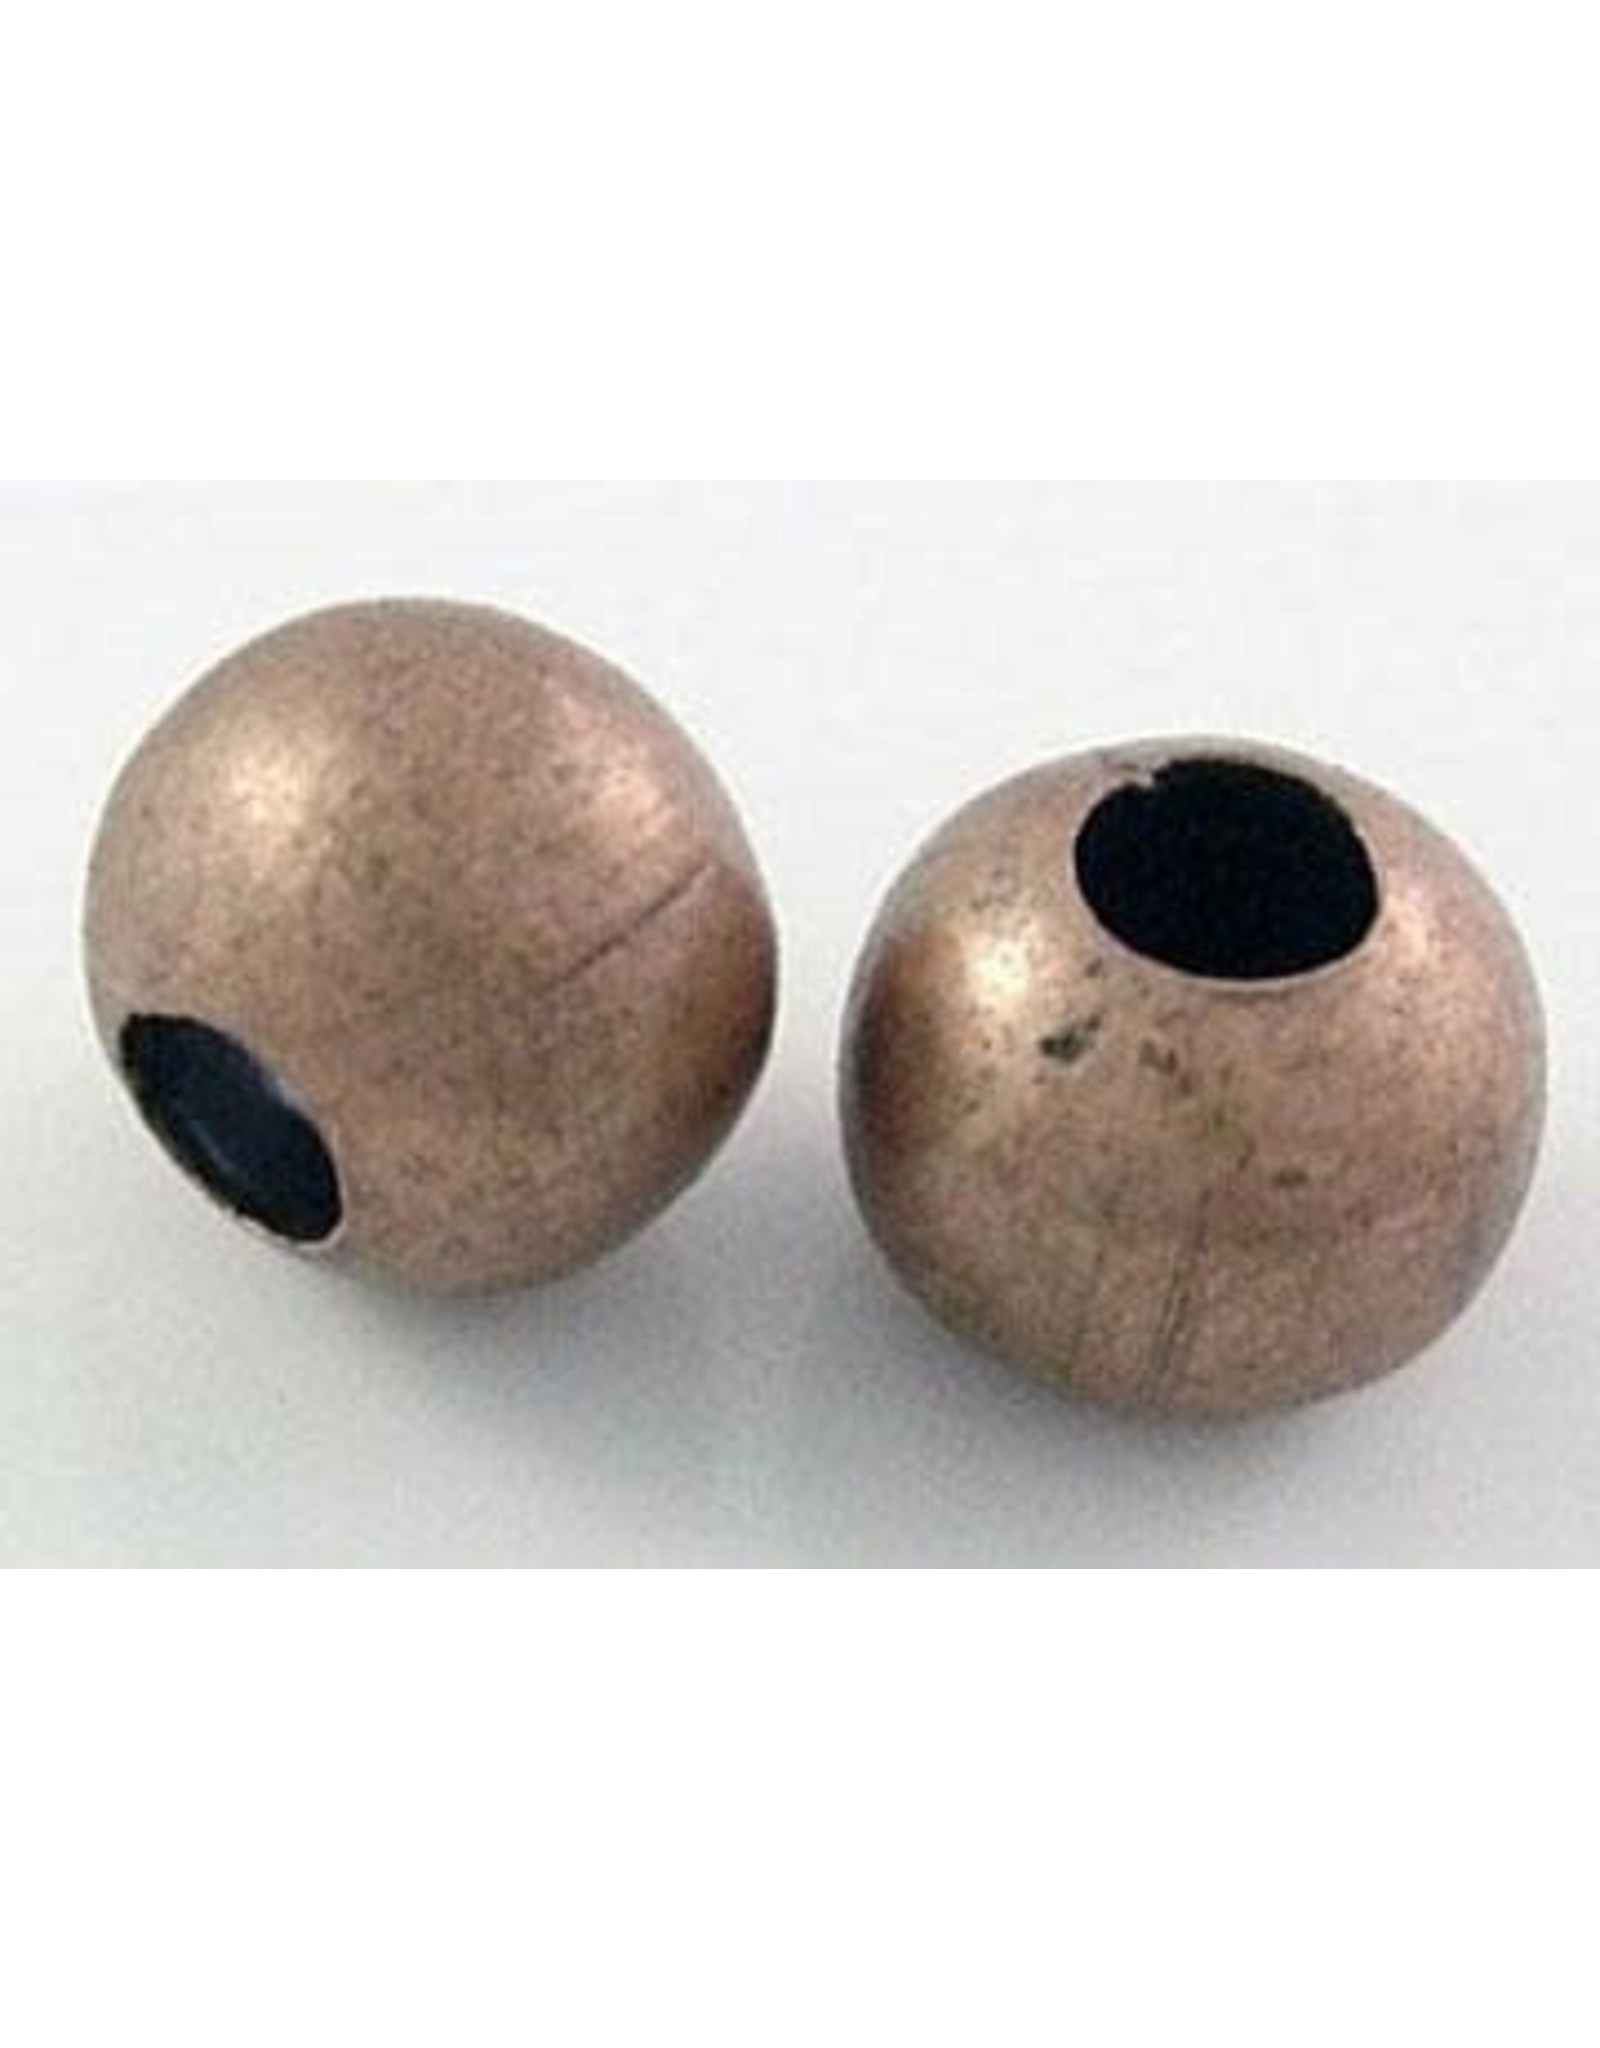 Round Antique Copper Spacer Bead  5mm  x100